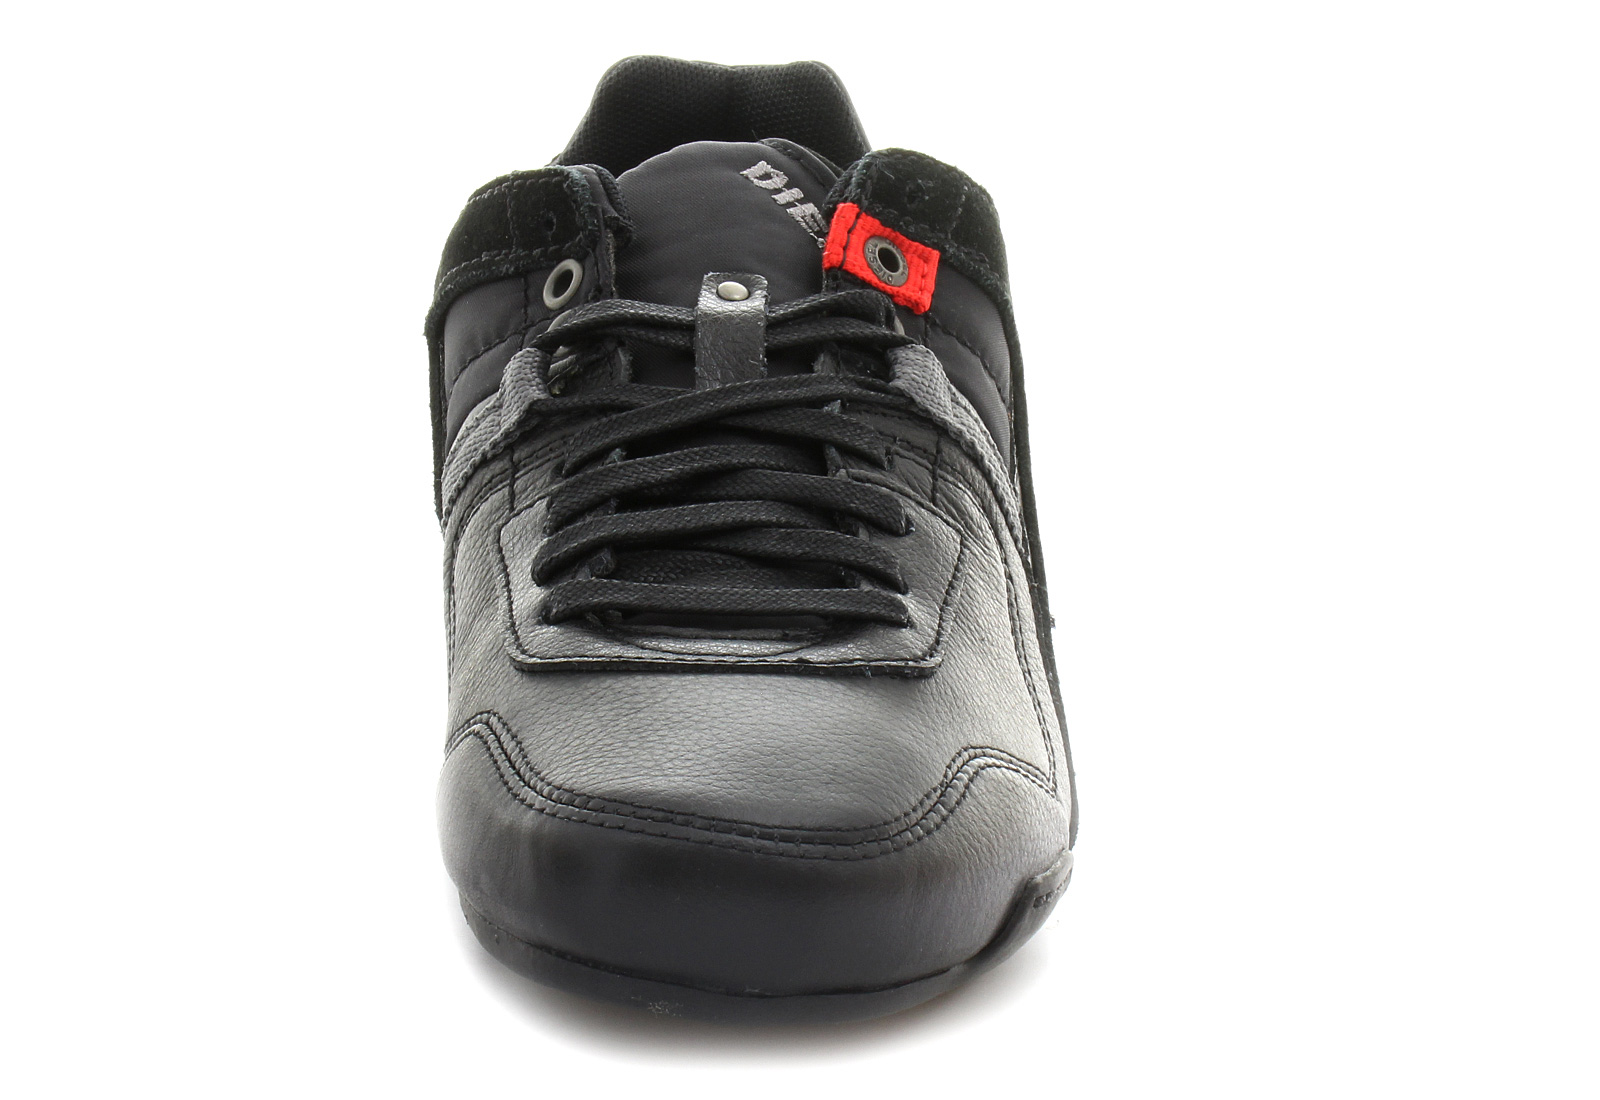 Diesel Shoes - Korbin S - 936-120-8013 - Online shop for sneakers ...